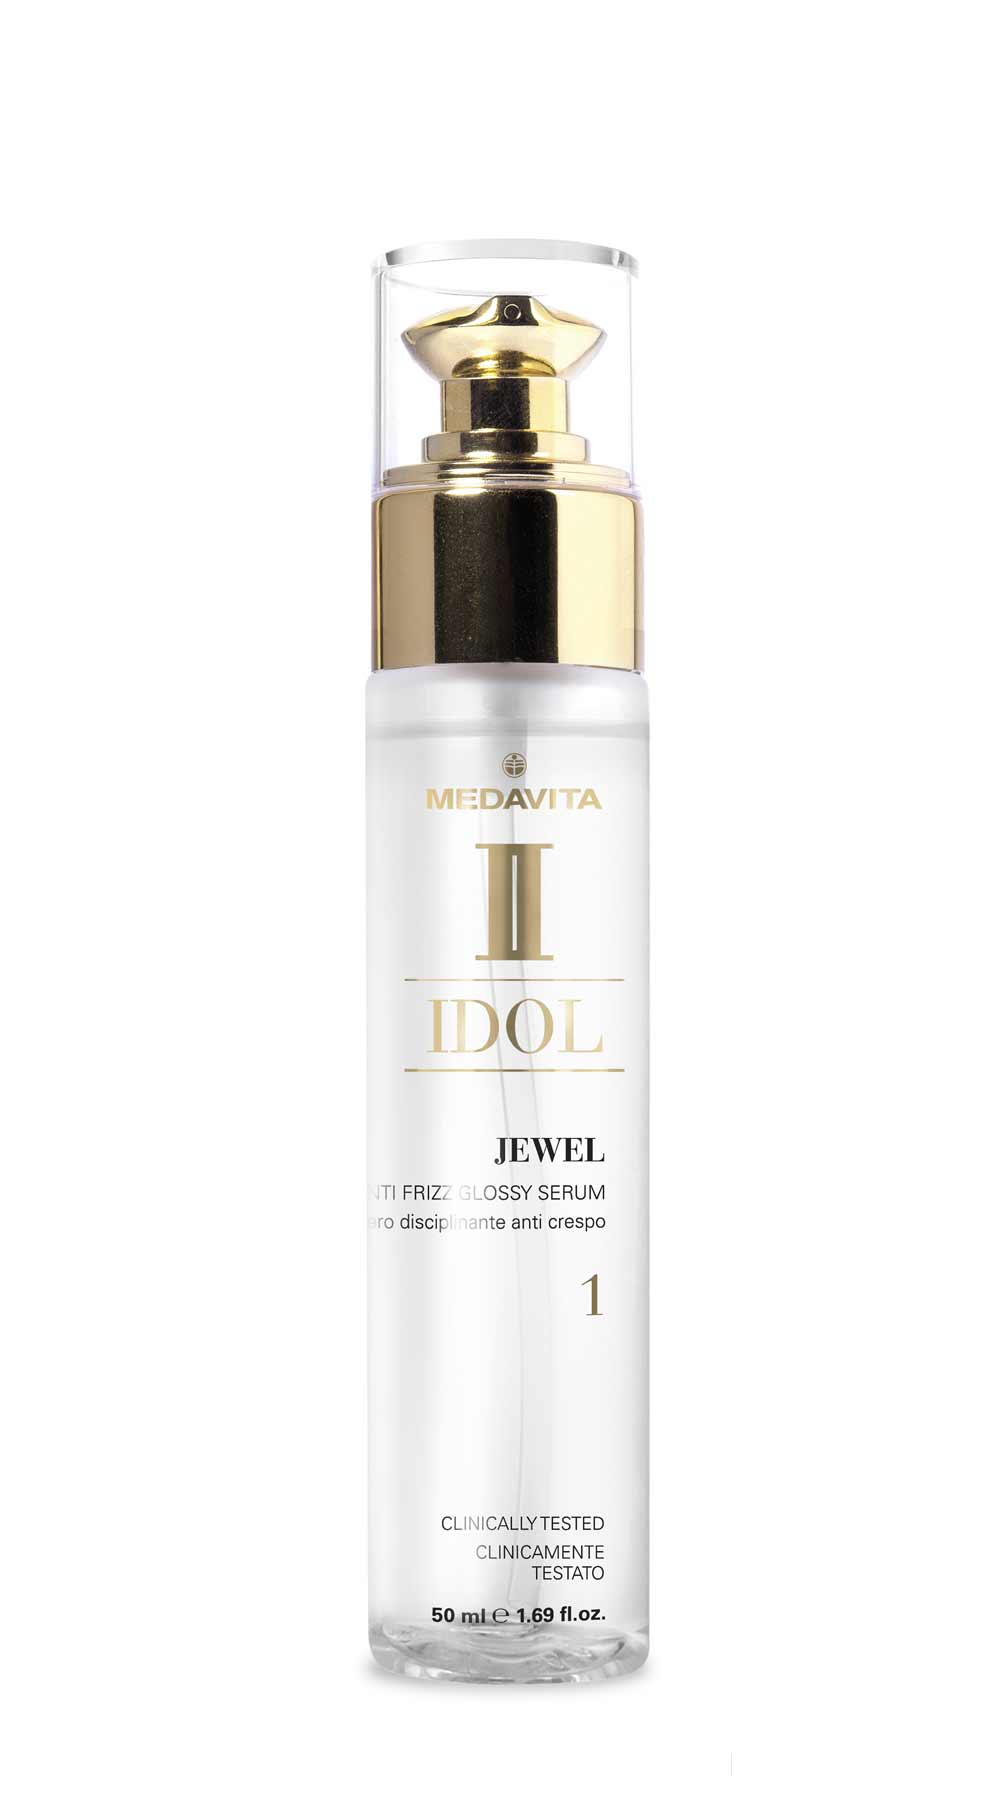 Jewel IDOL Spray 50ml DEF klein